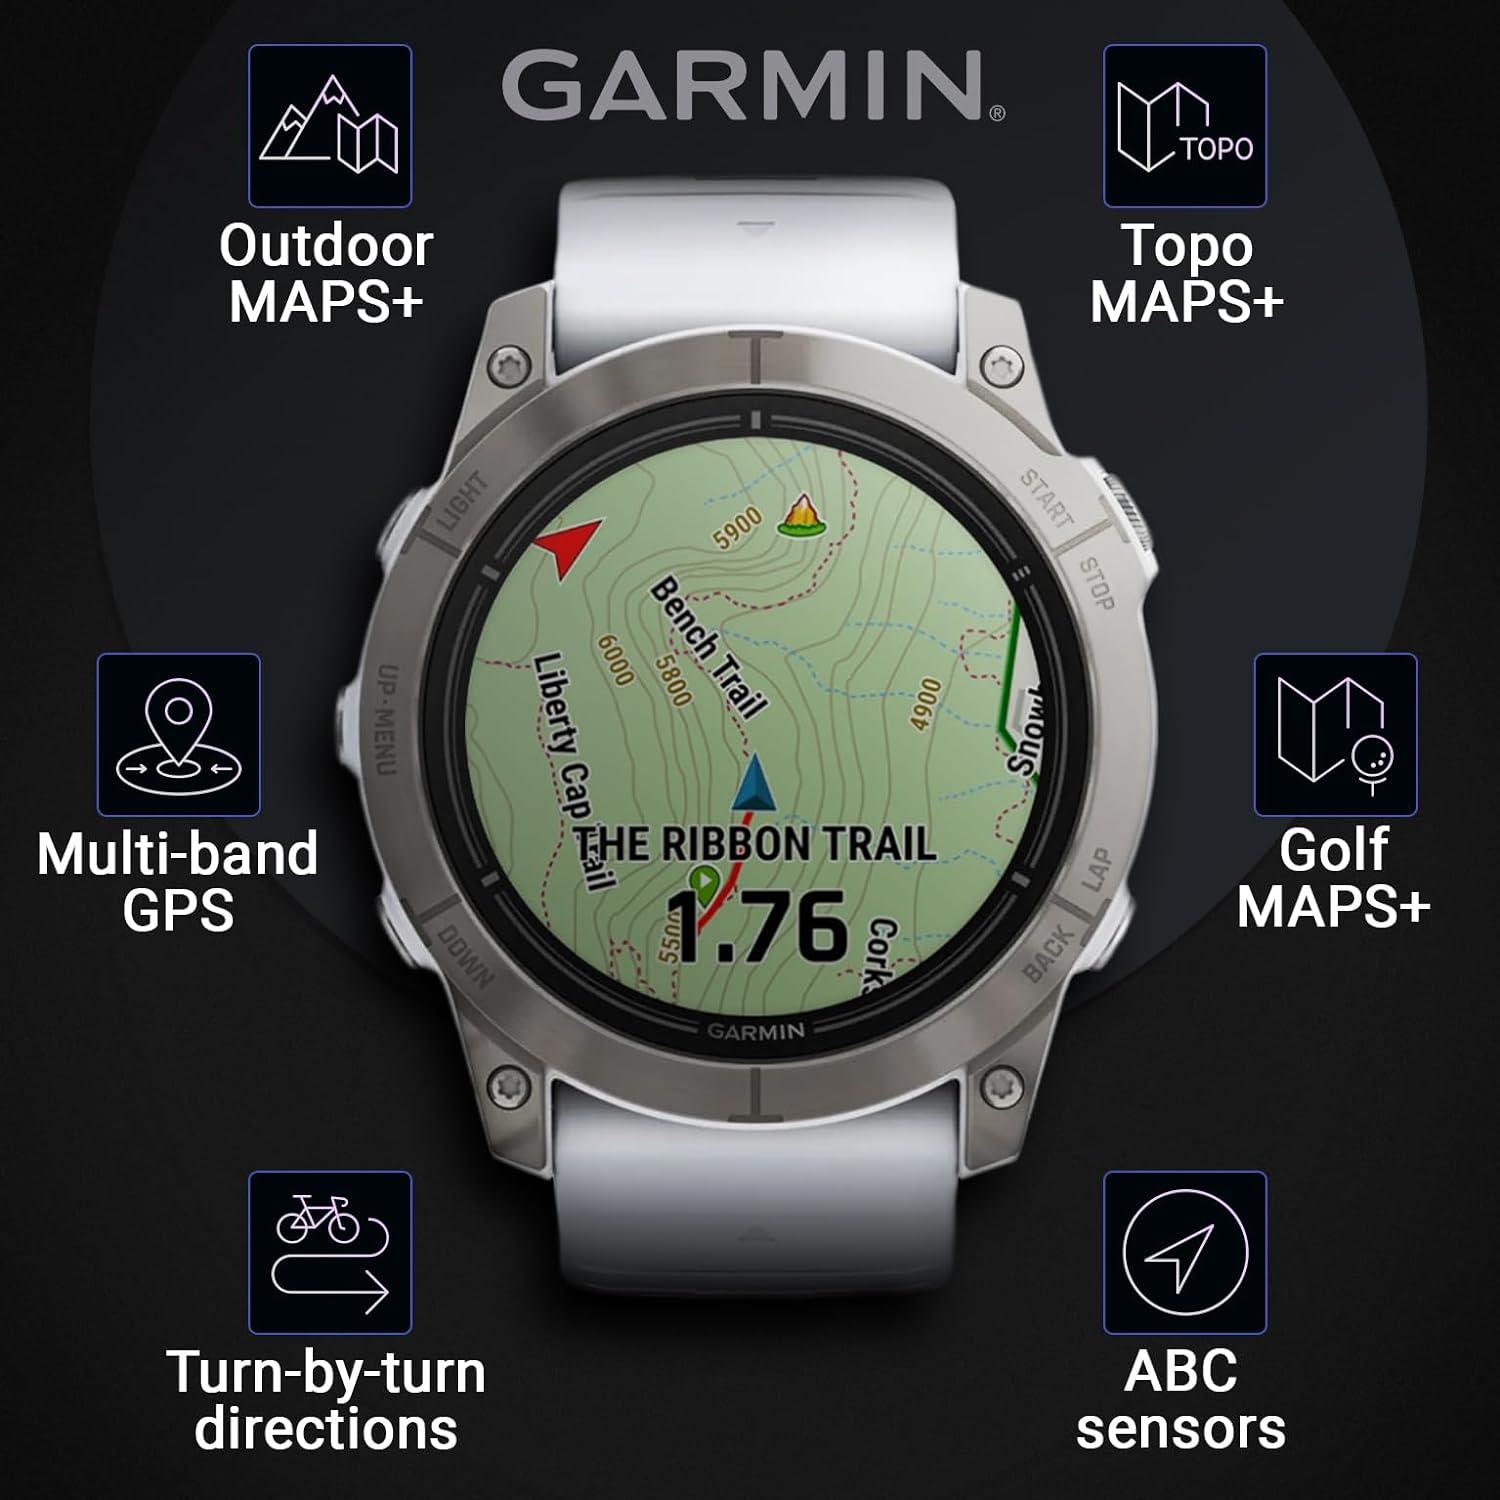 Garmin epix Pro (Gen 2) Sapphire Edition, 51mm, High Performance  Smartwatch, Advanced Training Technology, Built-in Flashlight, Whitestone  with